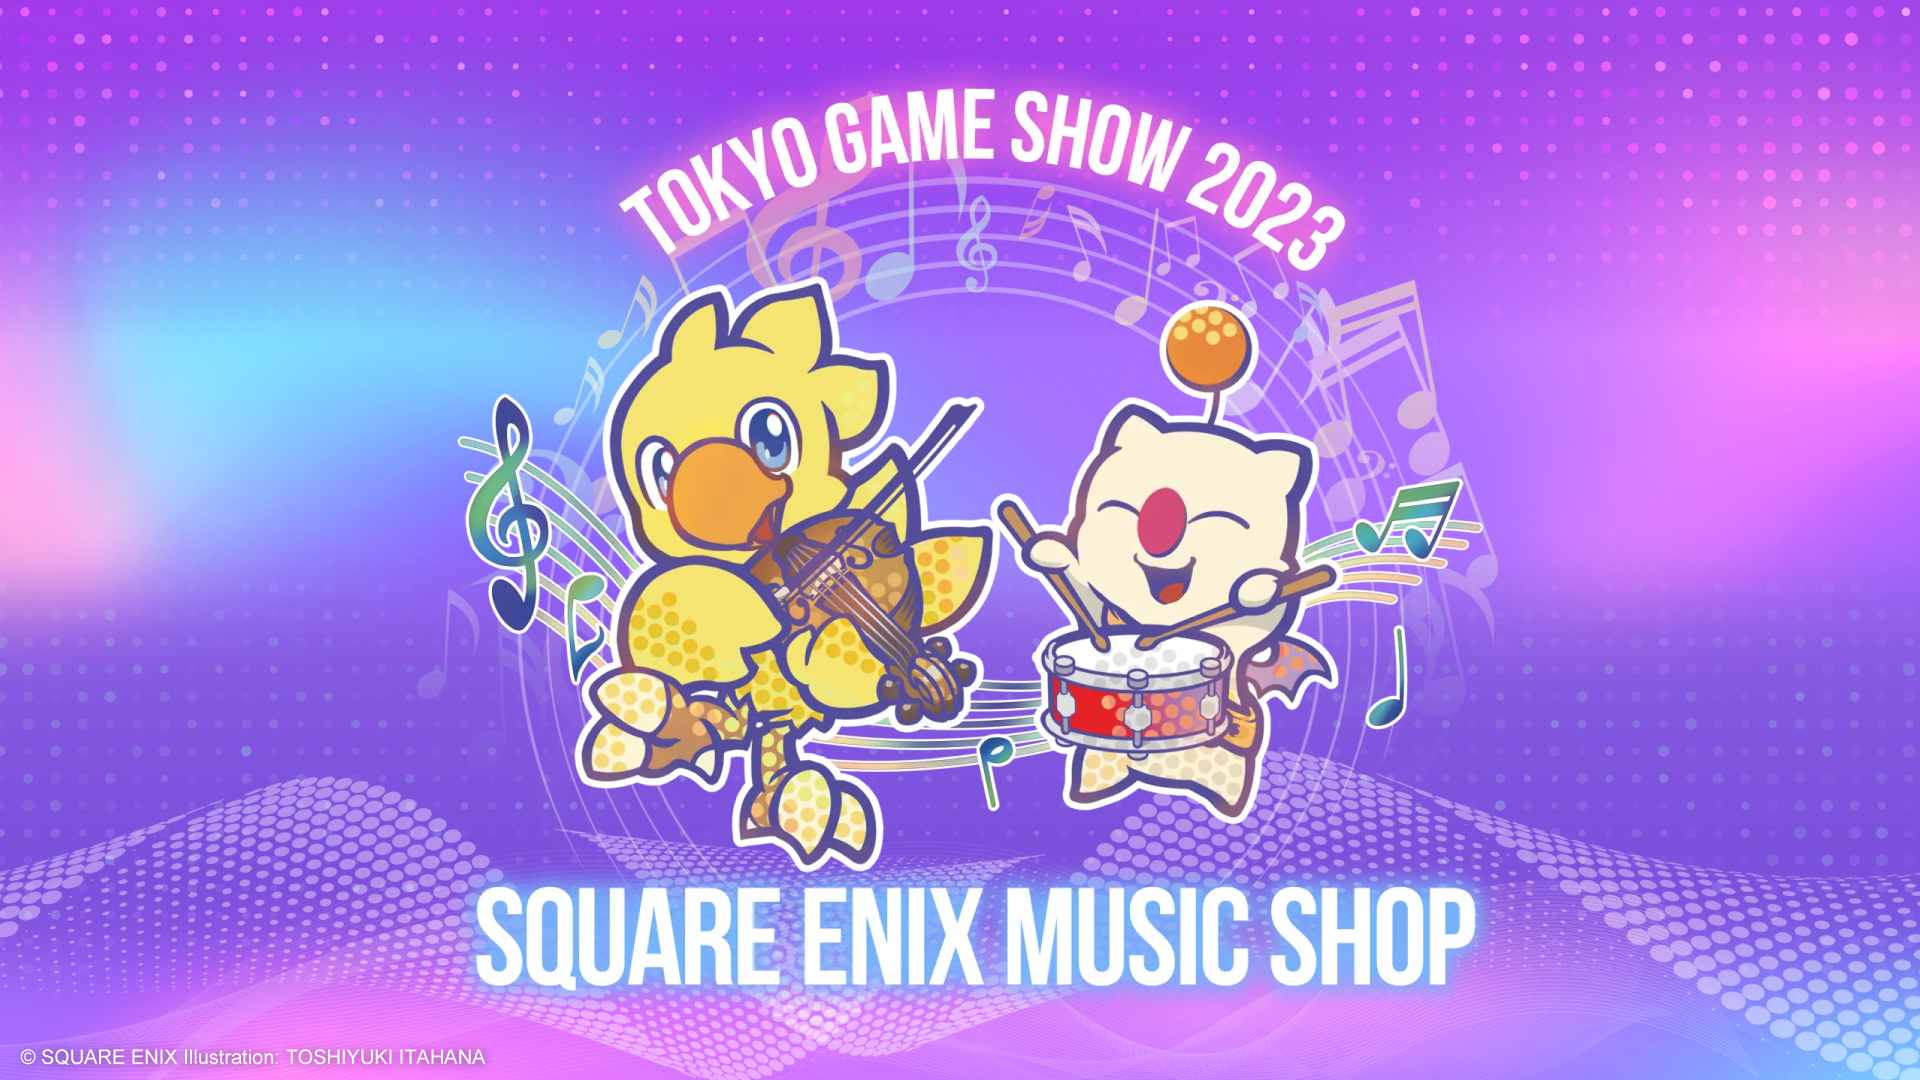 TOKYO GAME SHOW 2023「SQUARE ENIX MUSIC」物販ブース出店決定の